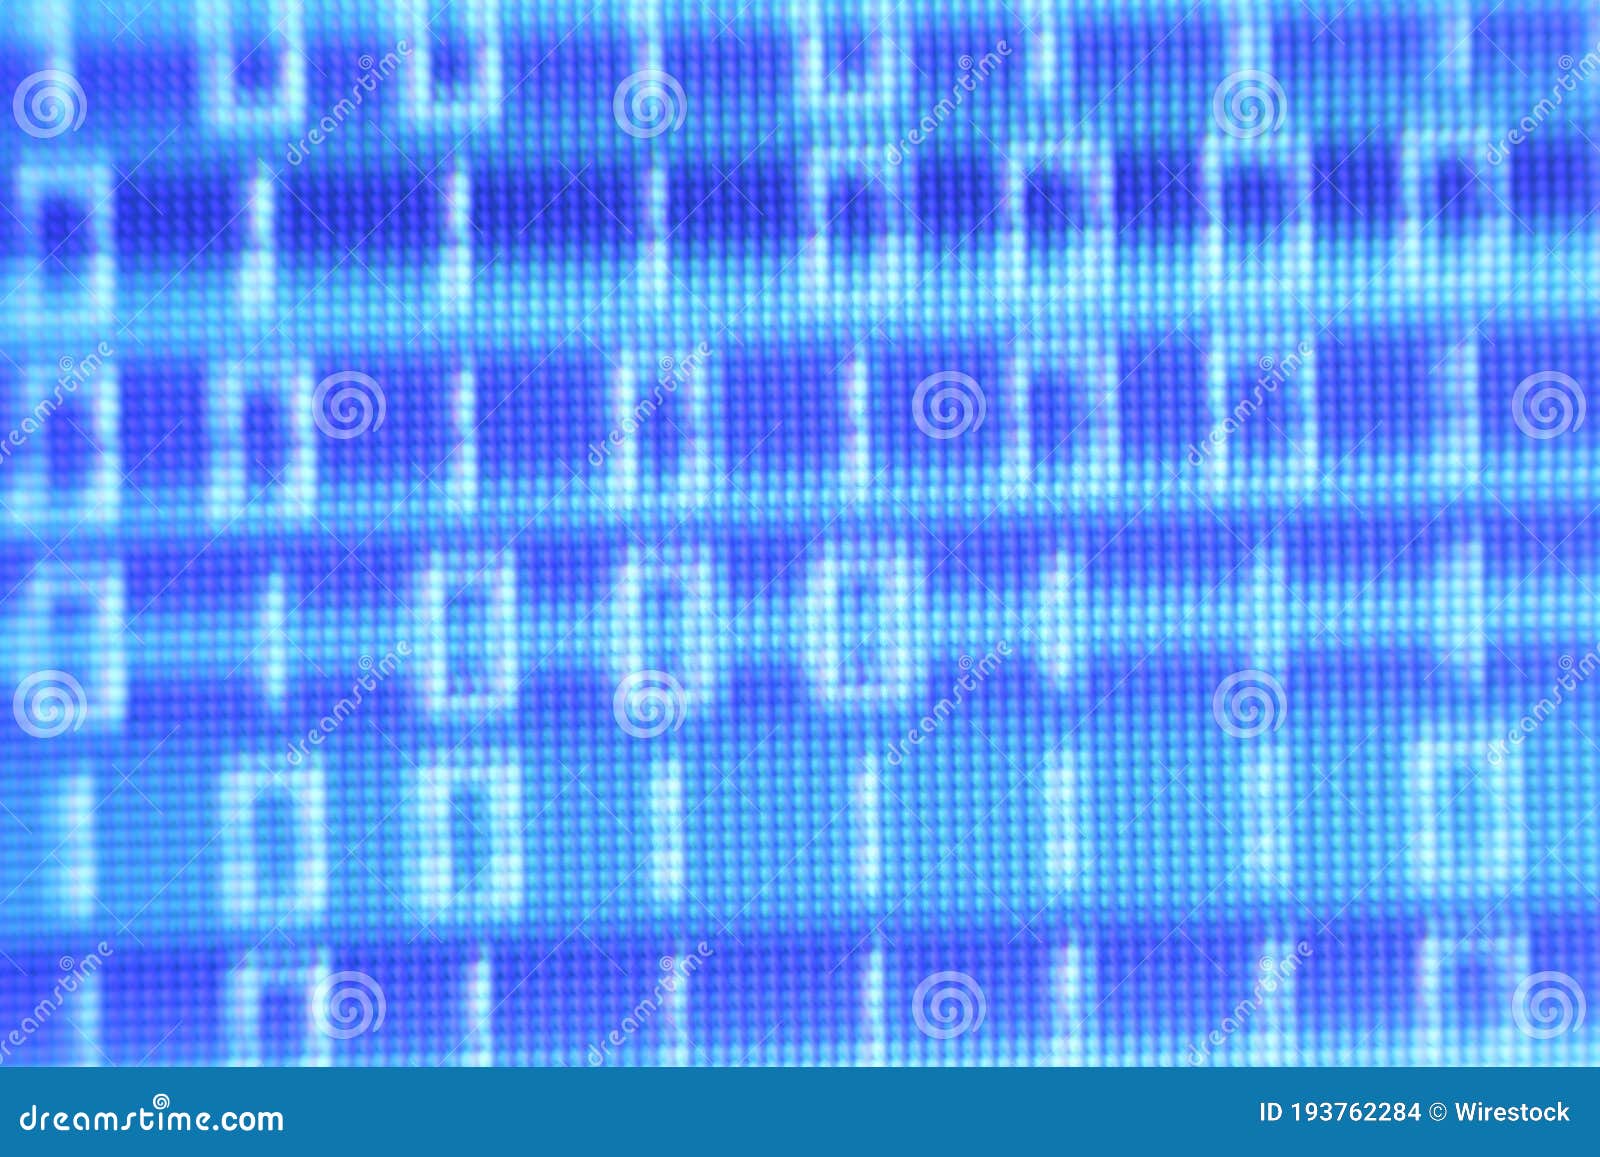 blue screens nice shot